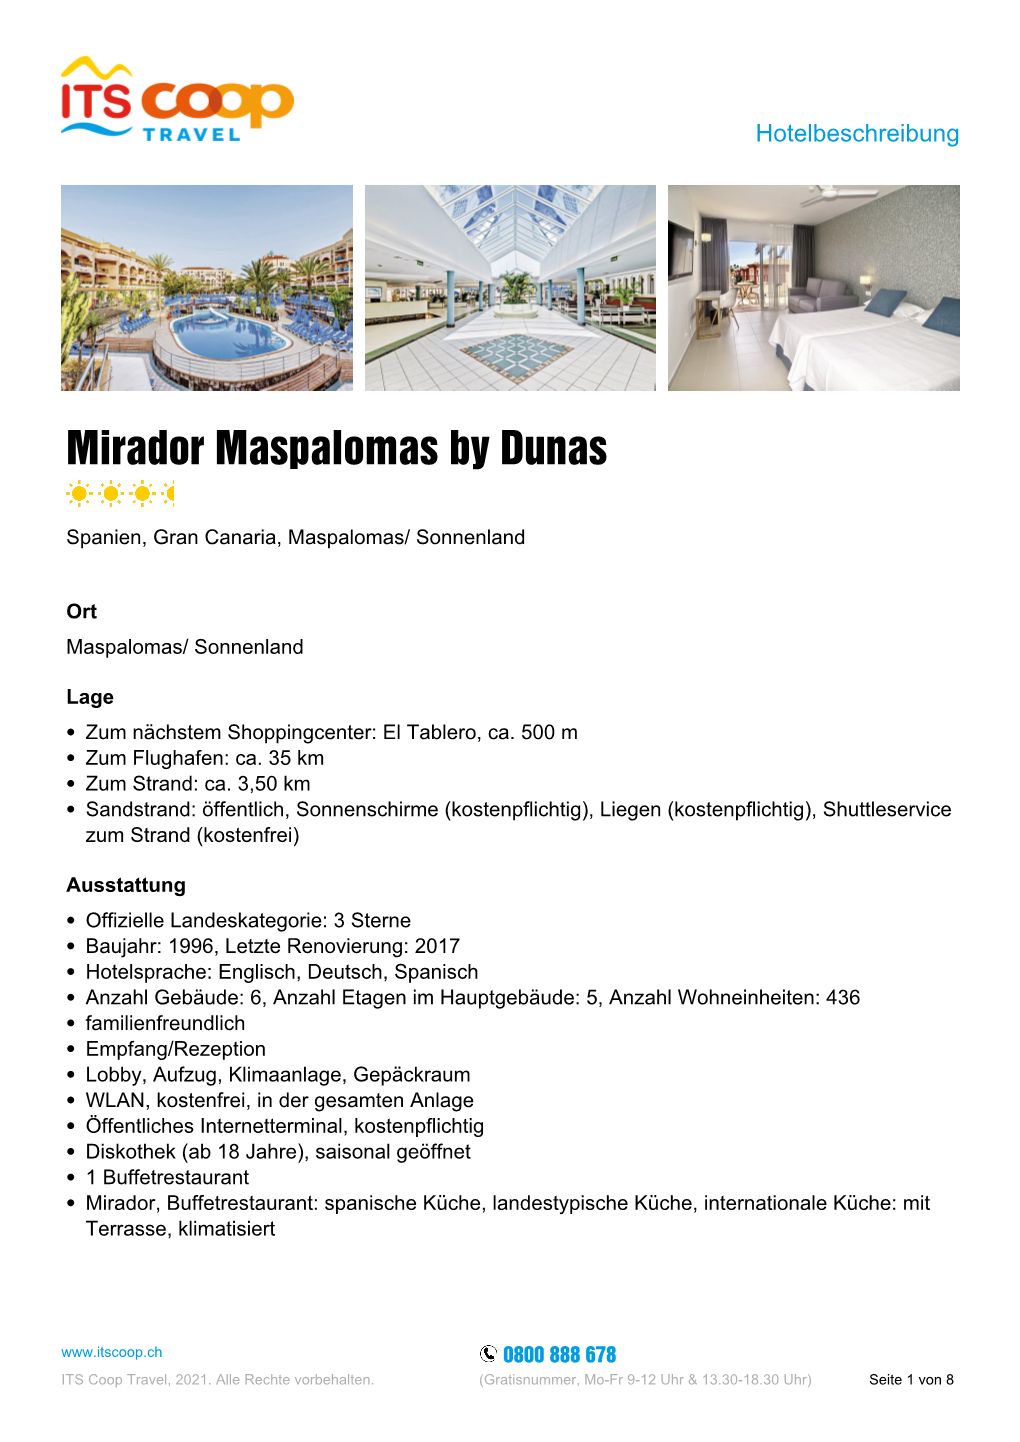 Mirador Maspalomas by Dunas